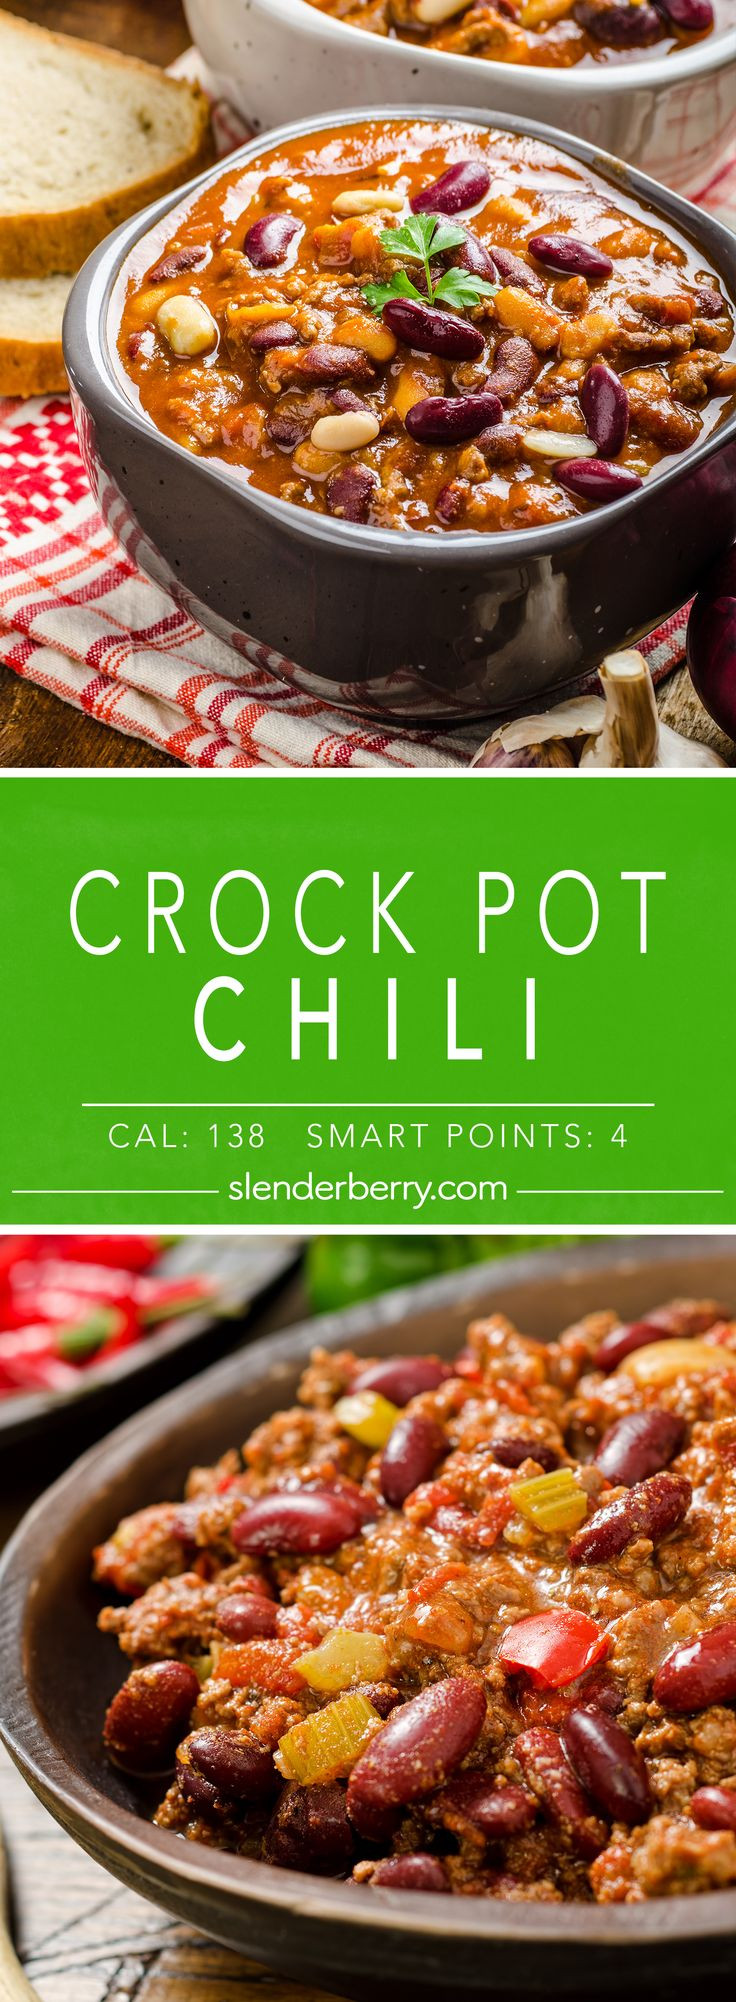 Healthy Low Carb Crock Pot Recipes
 40 best Low Carb Recipes images on Pinterest